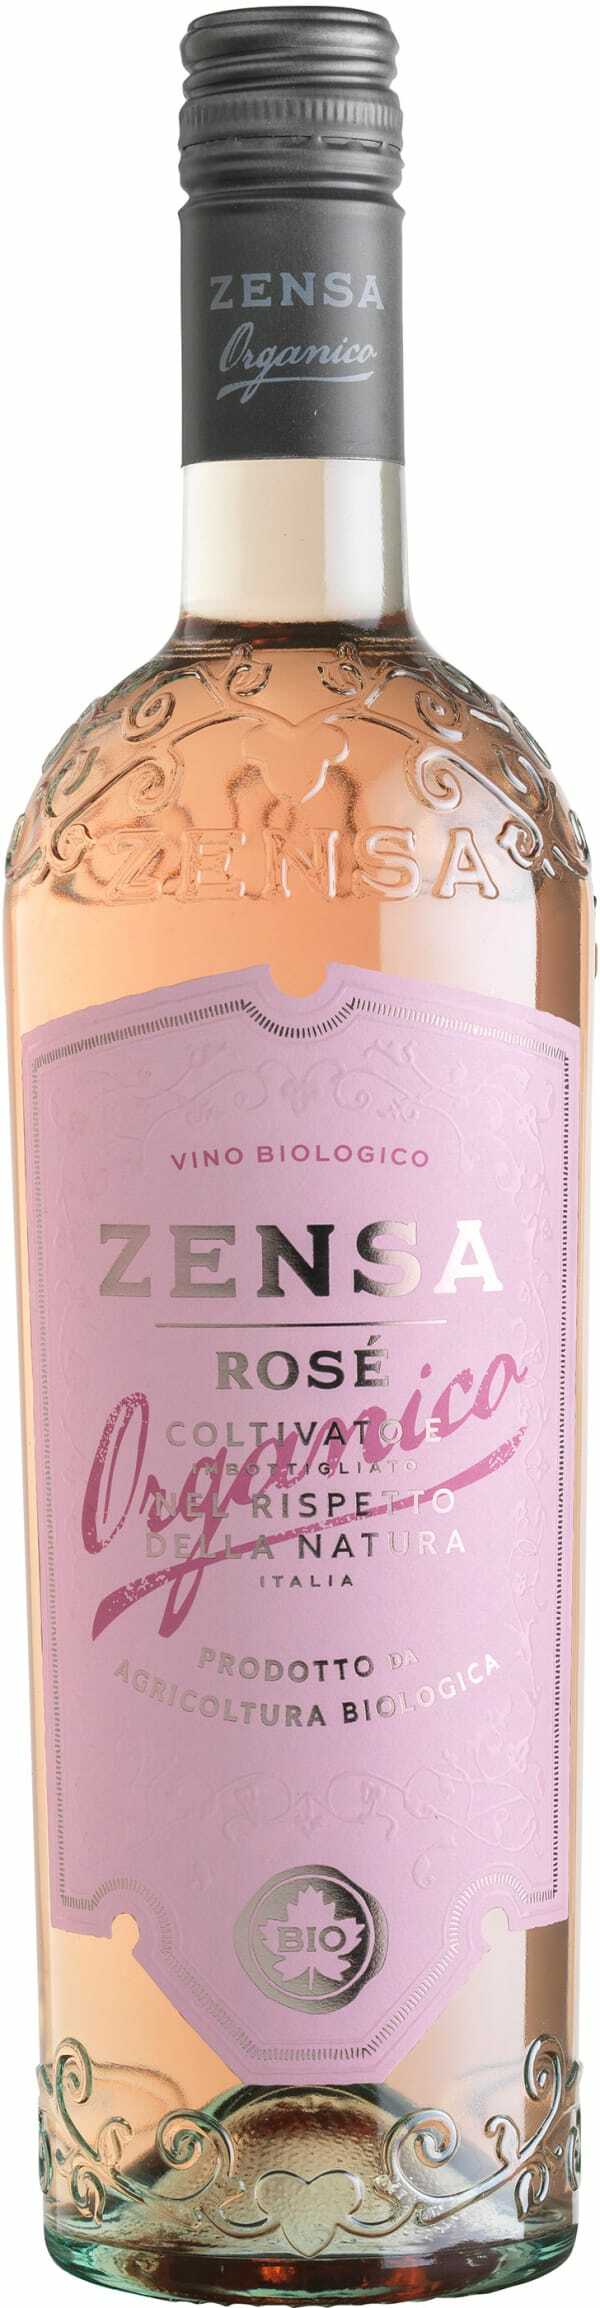 Zensa Rosé Organico 2020